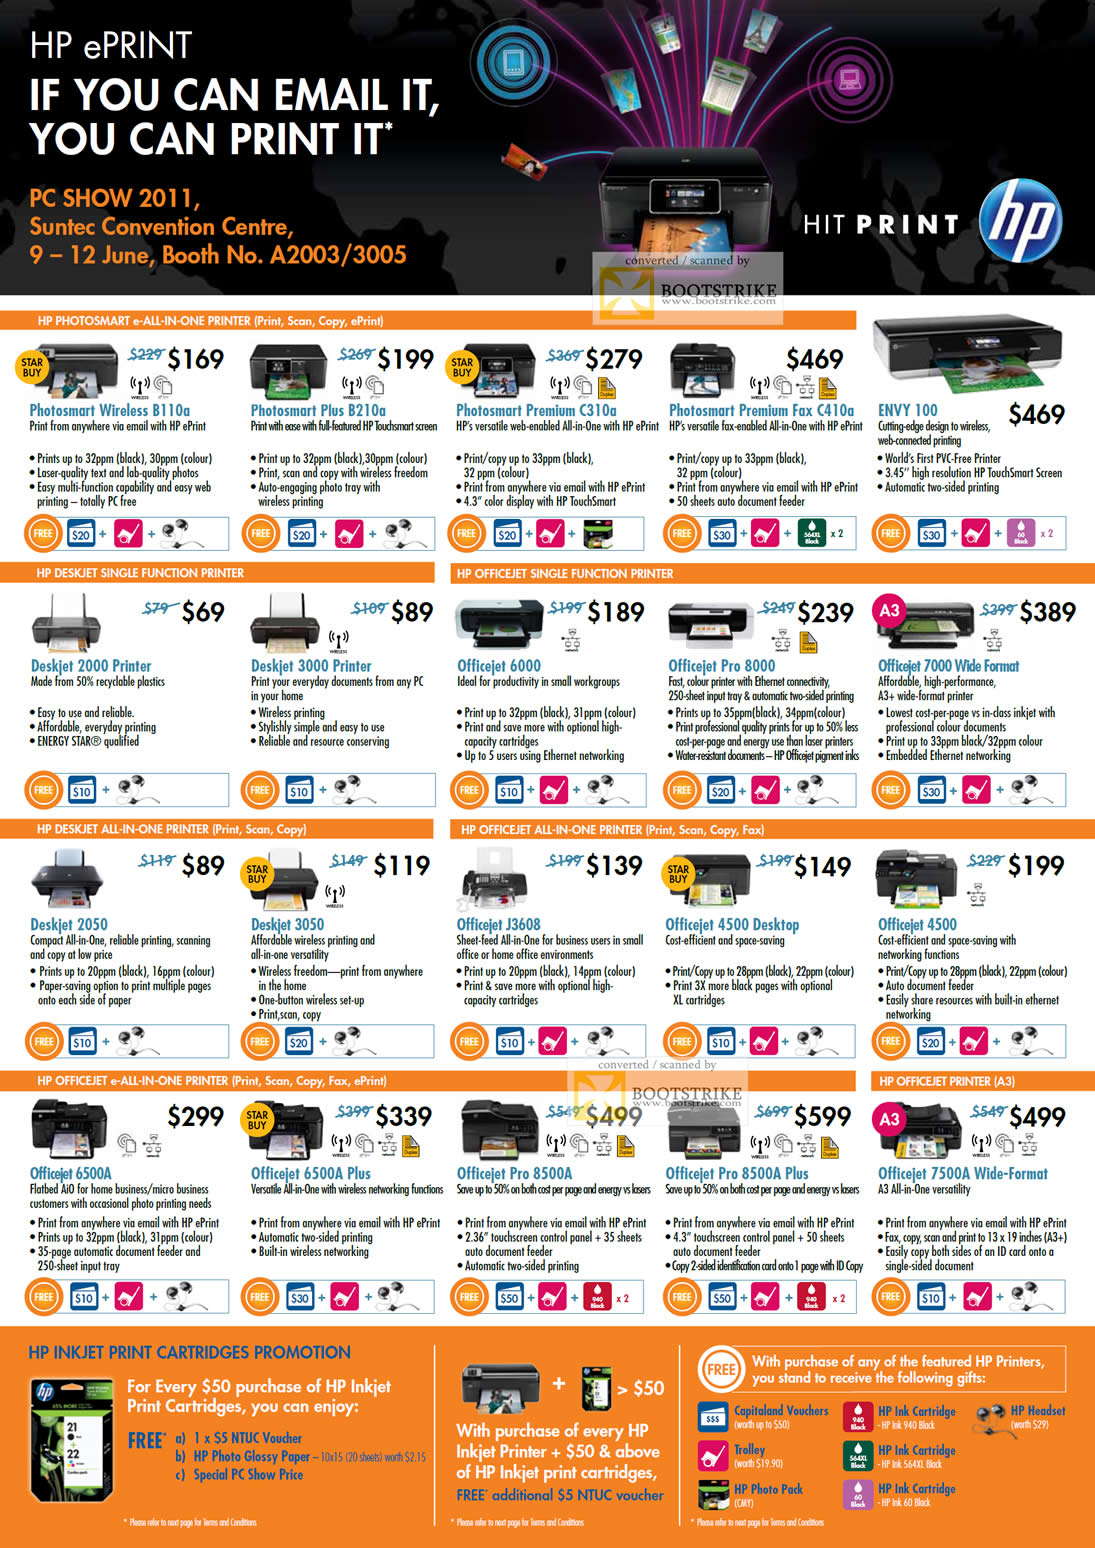 PC Show 2011 price list image brochure of HP Printers Photosmart AIO Wireless Deskjet Officejet Envy 100 Plus Premium Fax Pro Wide Format